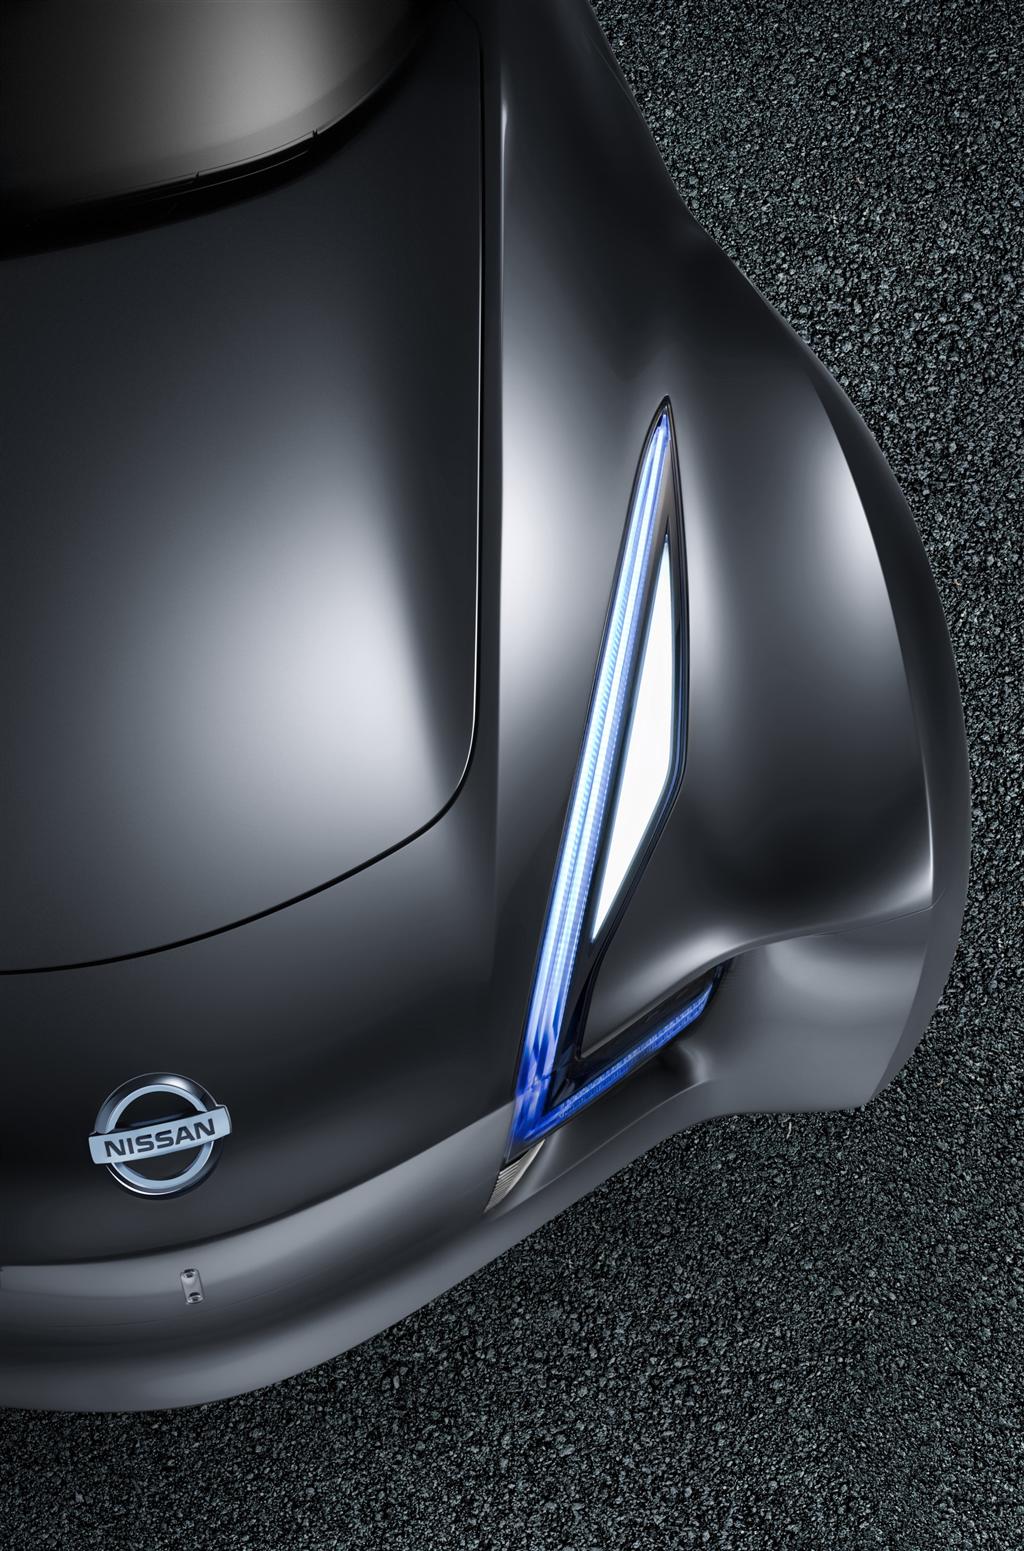 2011 Nissan ESFLOW Concept